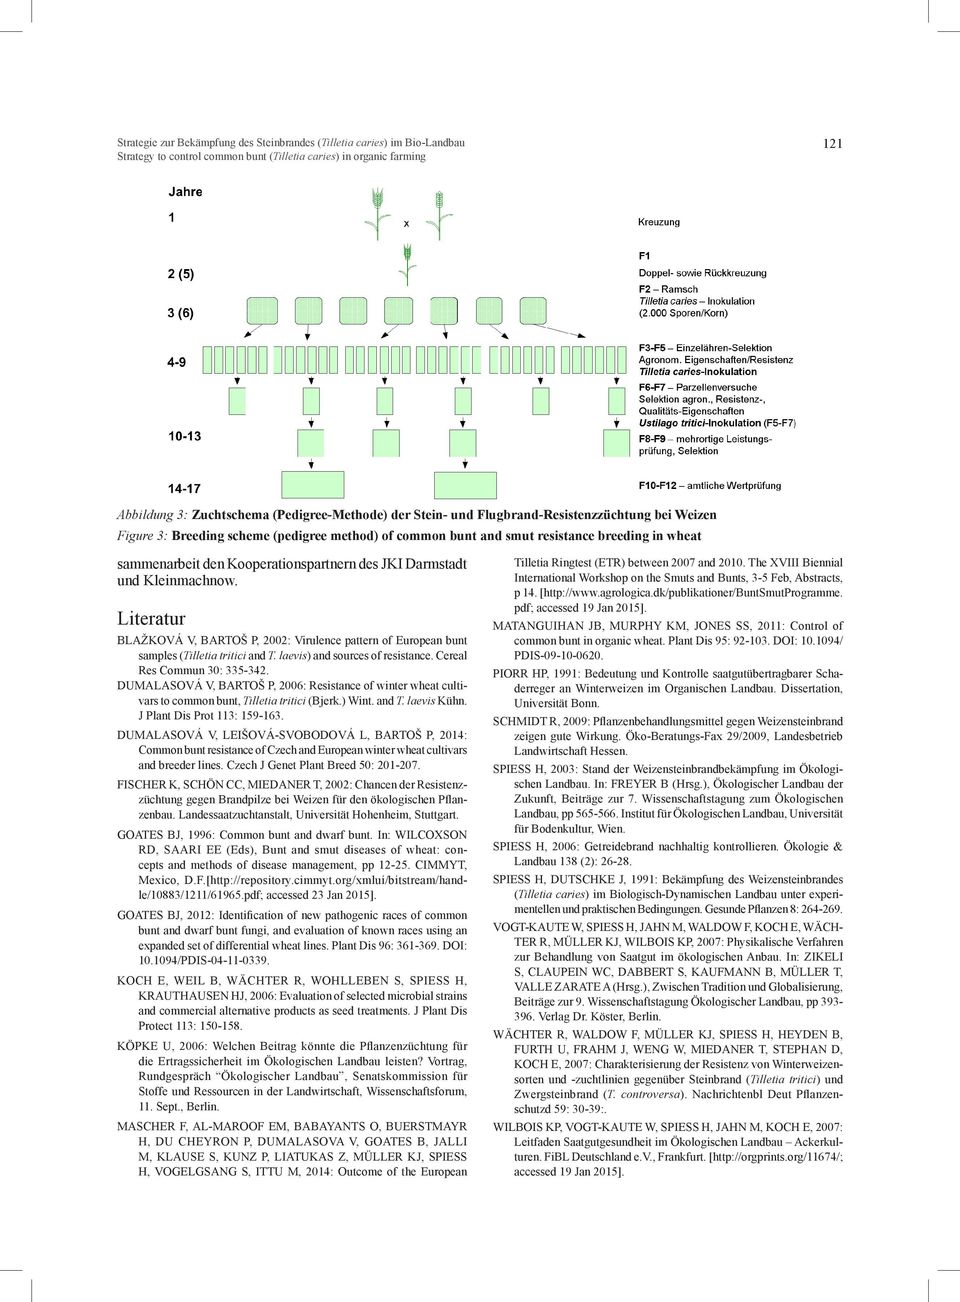 Literatur BLAŽKOVÁ V, BARTOŠ P, 2002: Virulence pattern of European bunt samples (Tilletia tritici and T. laevis) and sources of resistance. Cereal Res Commun 30: 335-342.